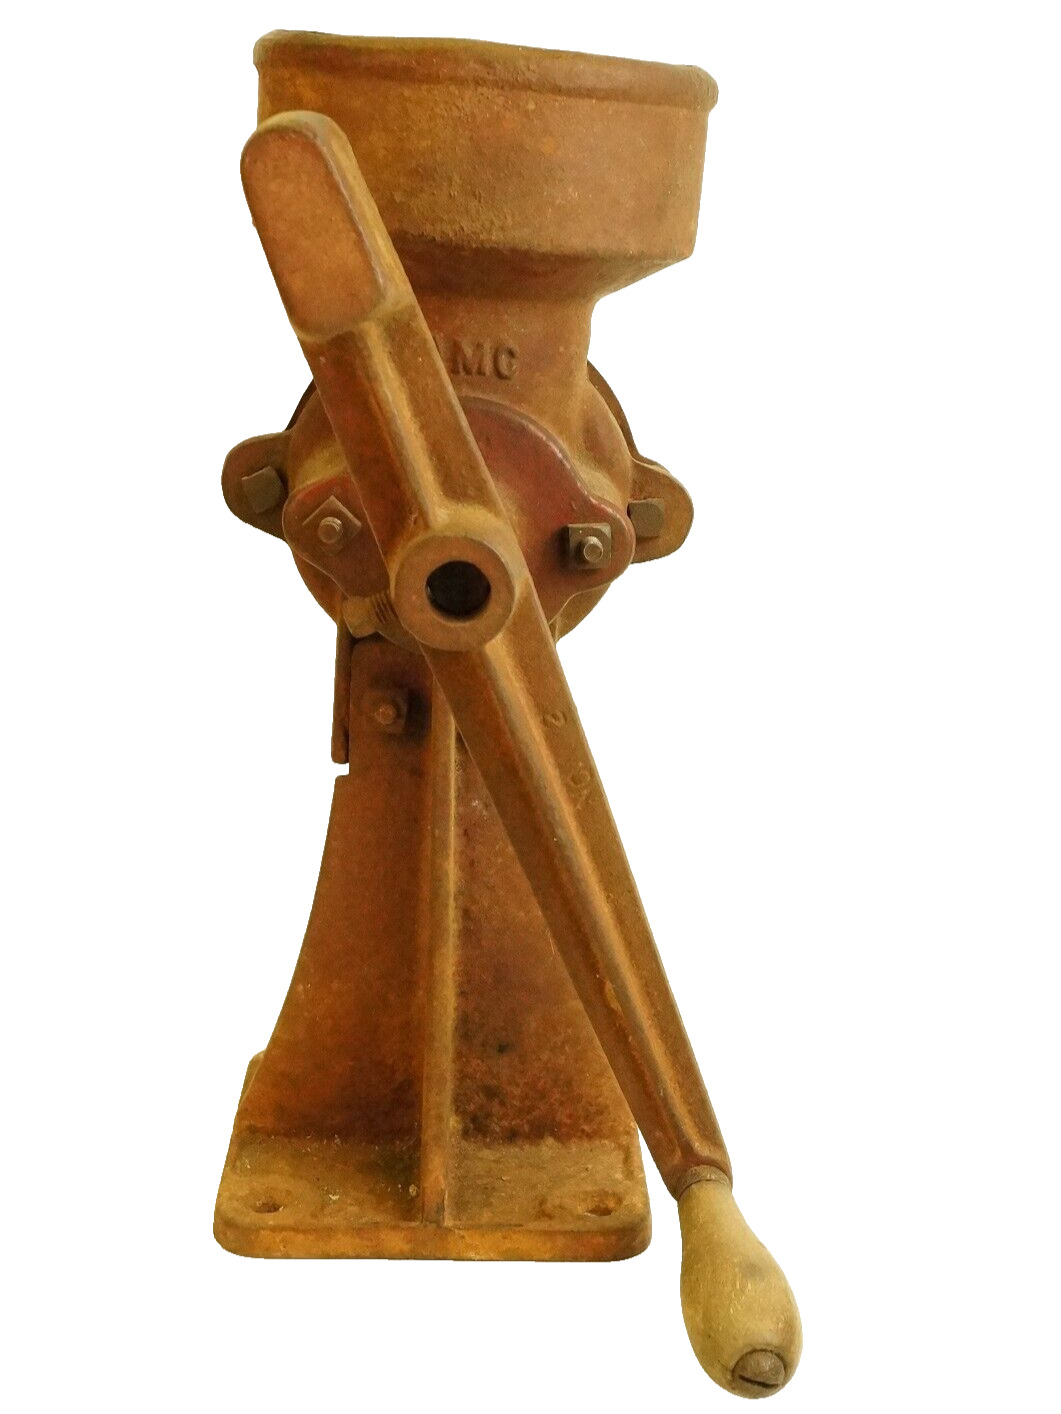 Antique C.S. Bell No. 2 Hand Crank Corn Grist Mill Grinder Cast Steel Adjustable